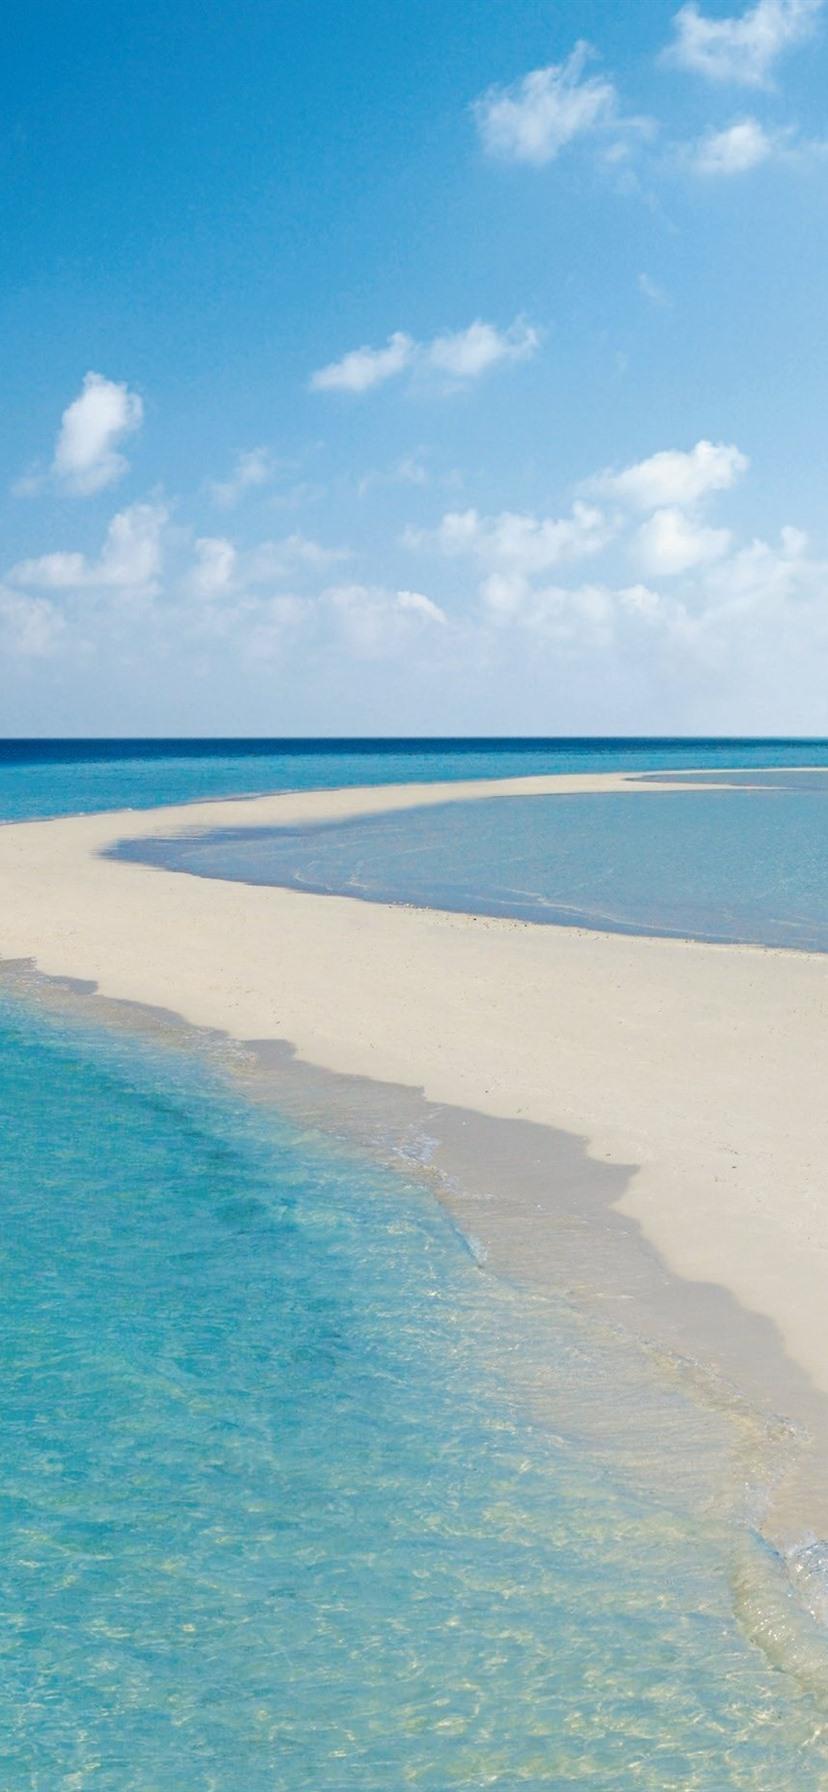 Maldives, beach, sea, chairs 828x1792 iPhone XR wallpapers